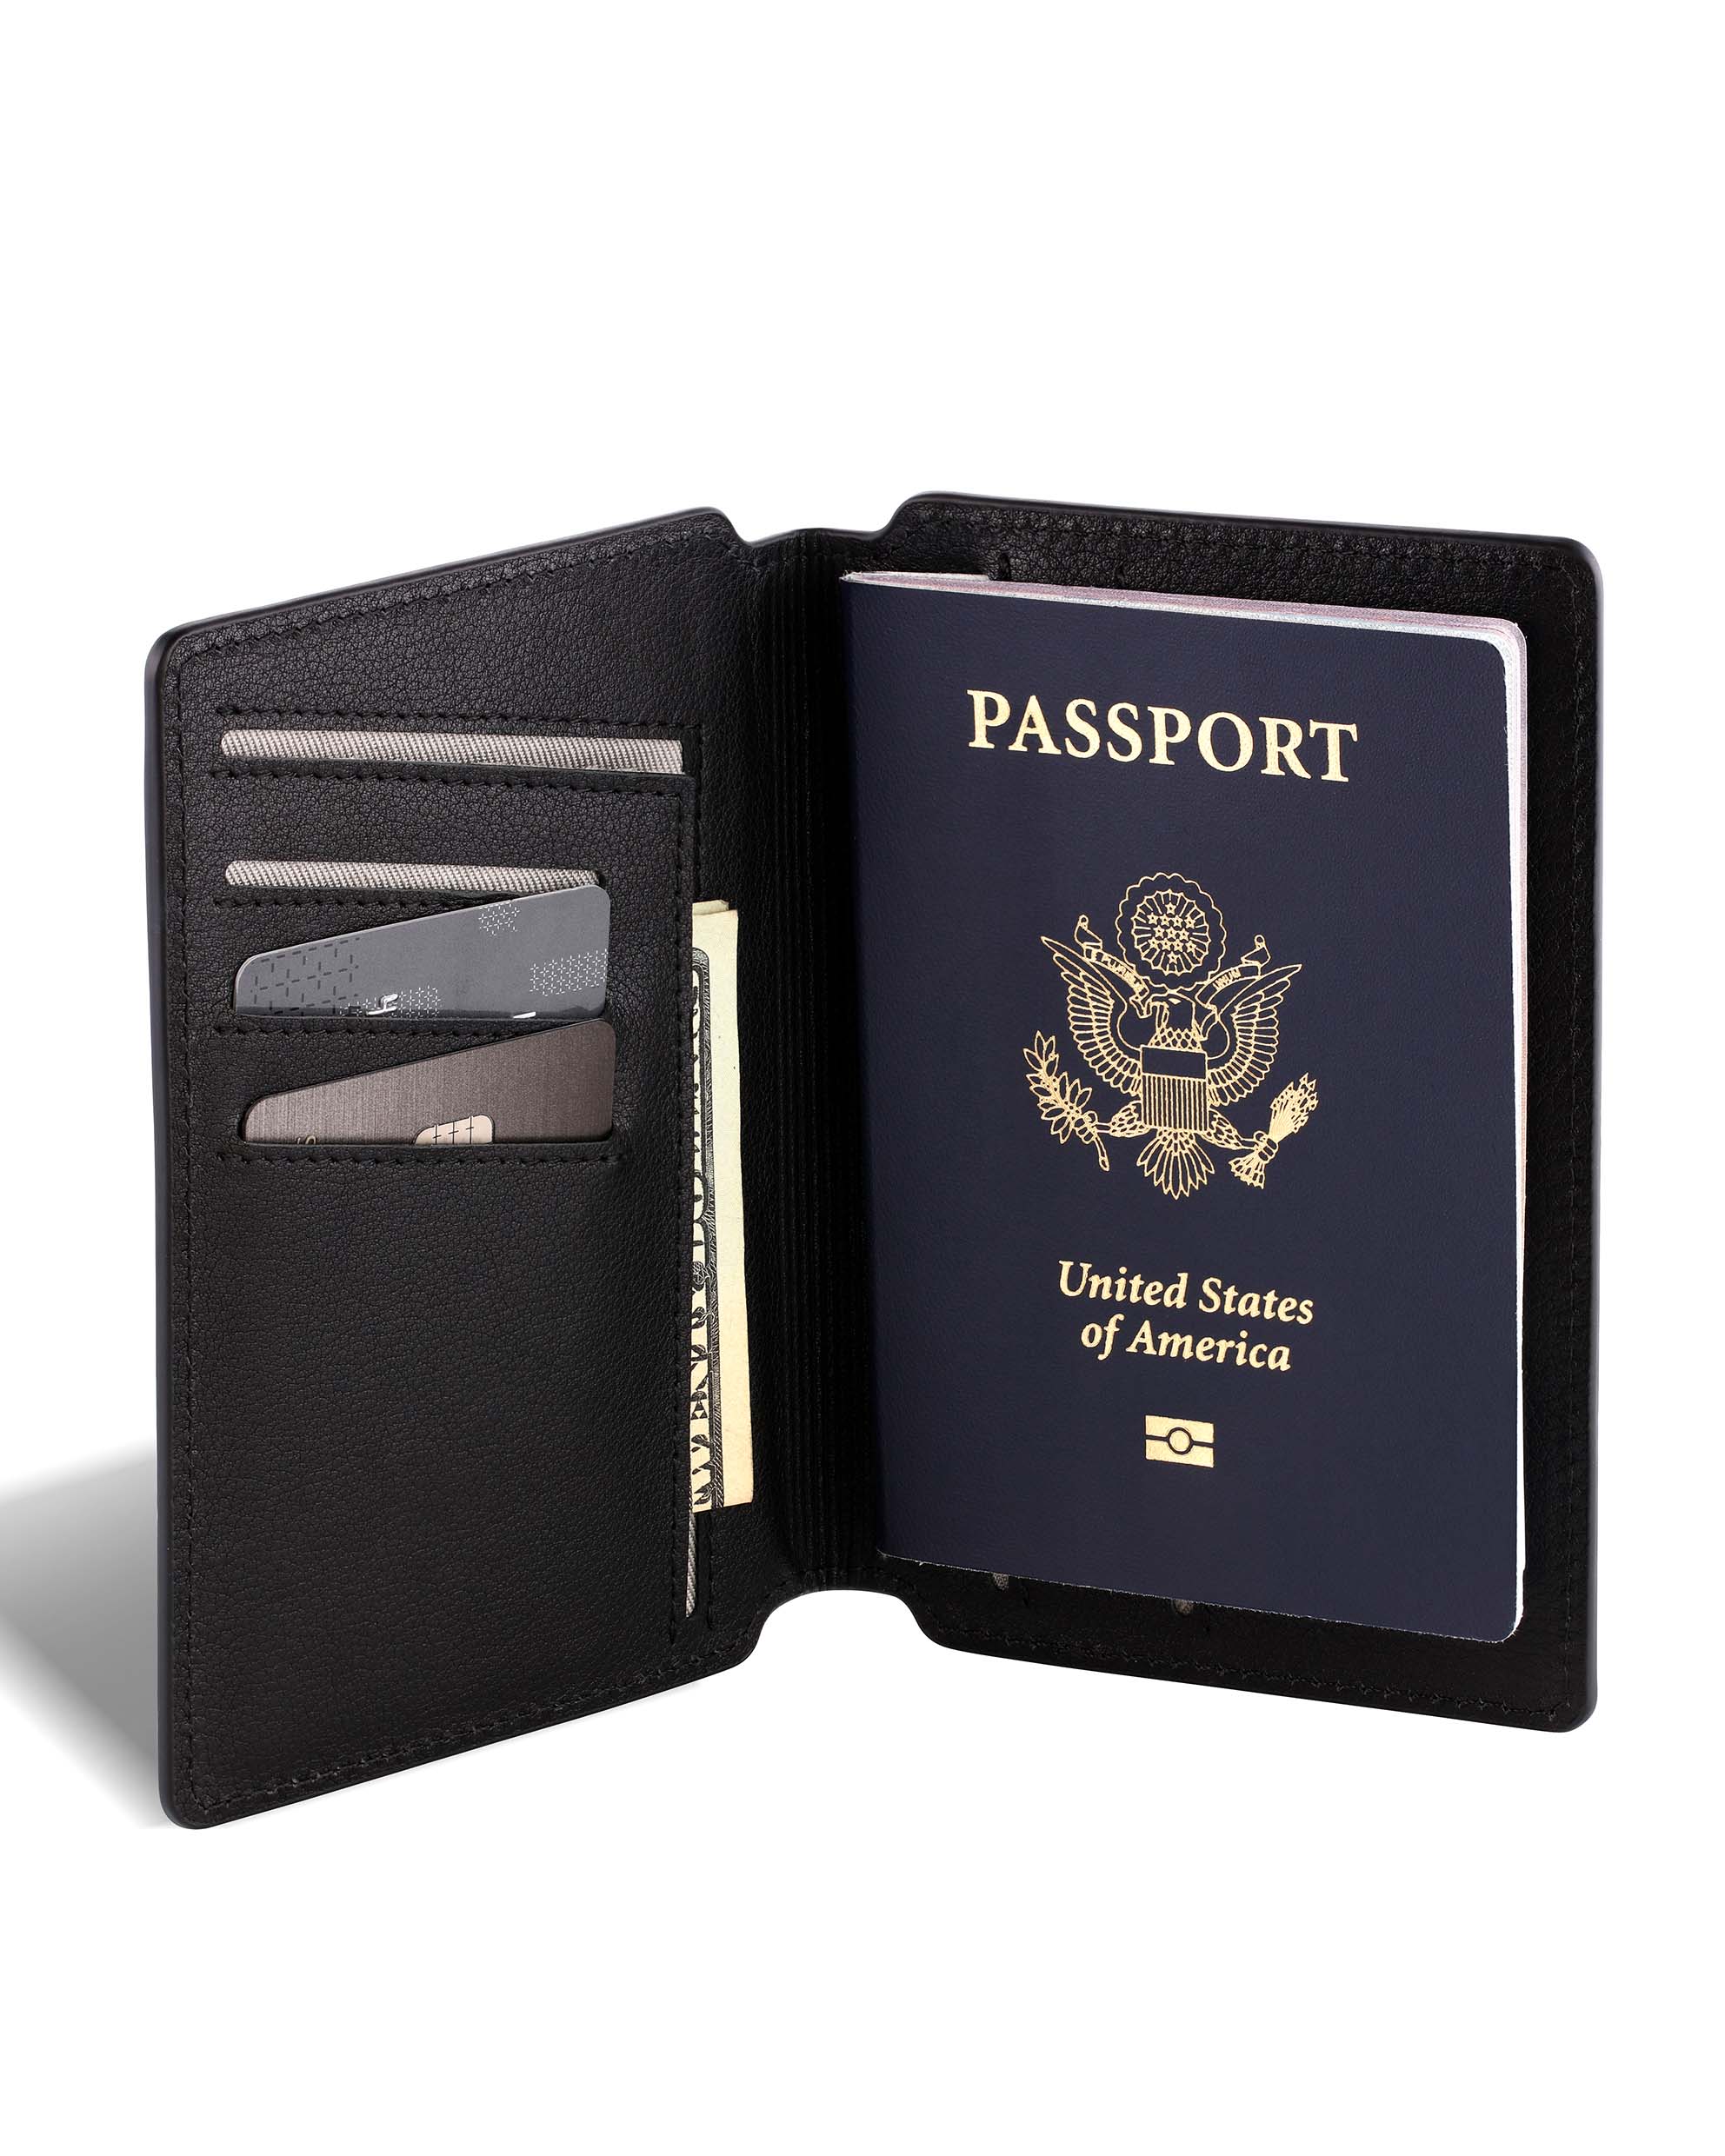 The Passport Wallet - Black | Vincero Watches & Vincero Collective